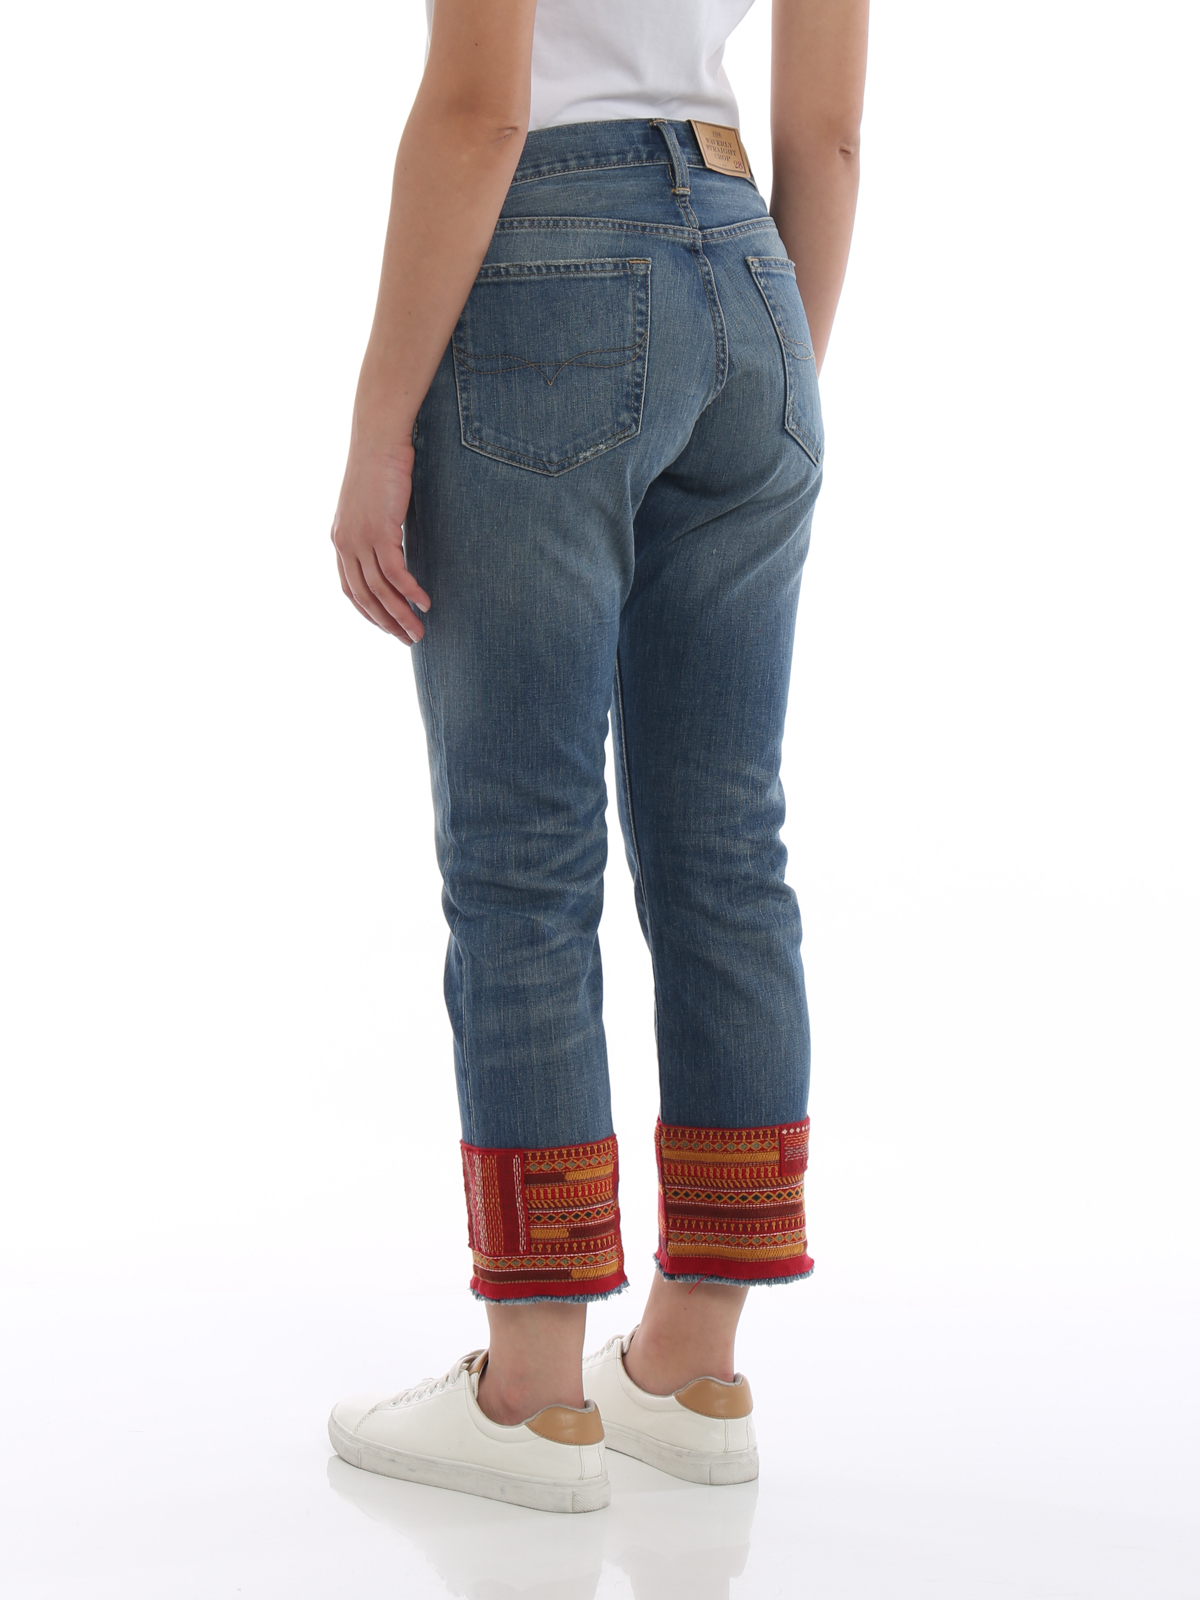 ralph lauren embroidered jeans